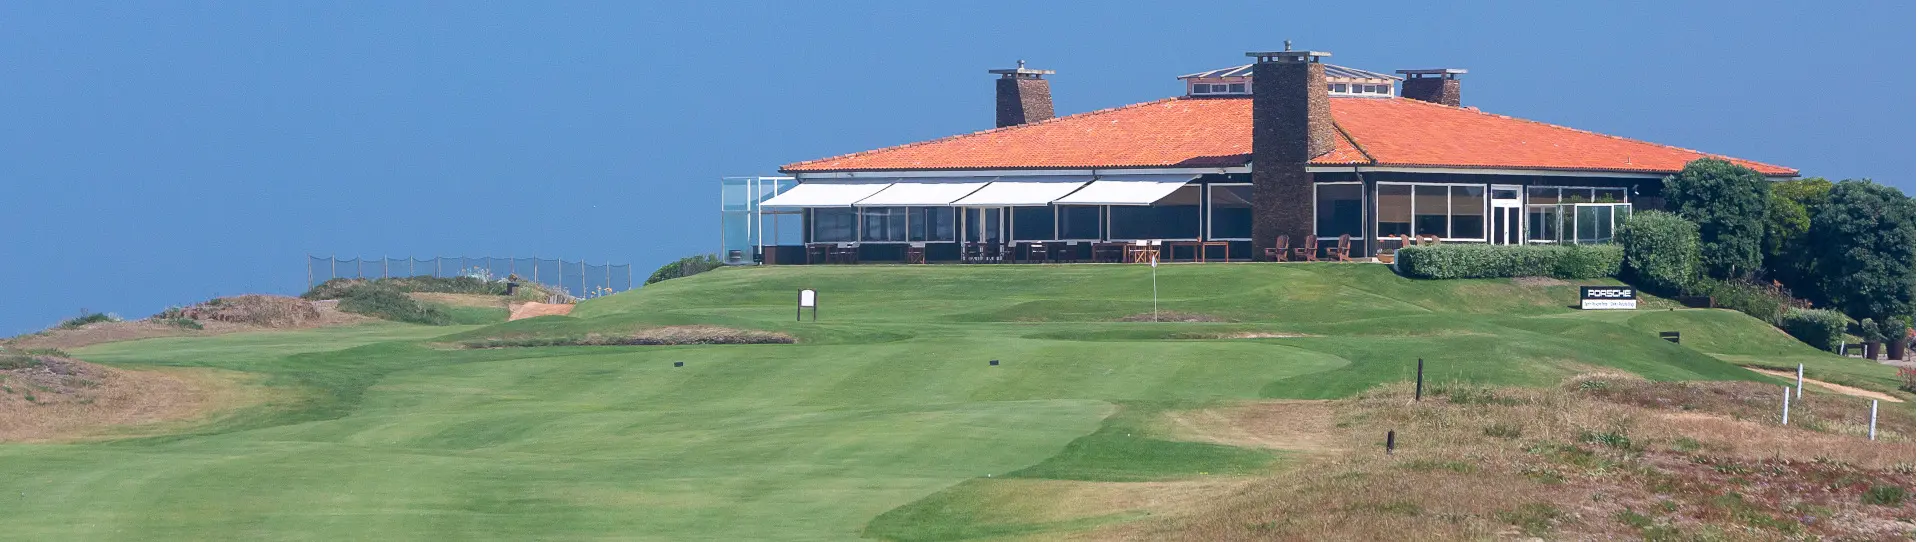 Portugal golf courses - Estela Golf Club - Photo 3